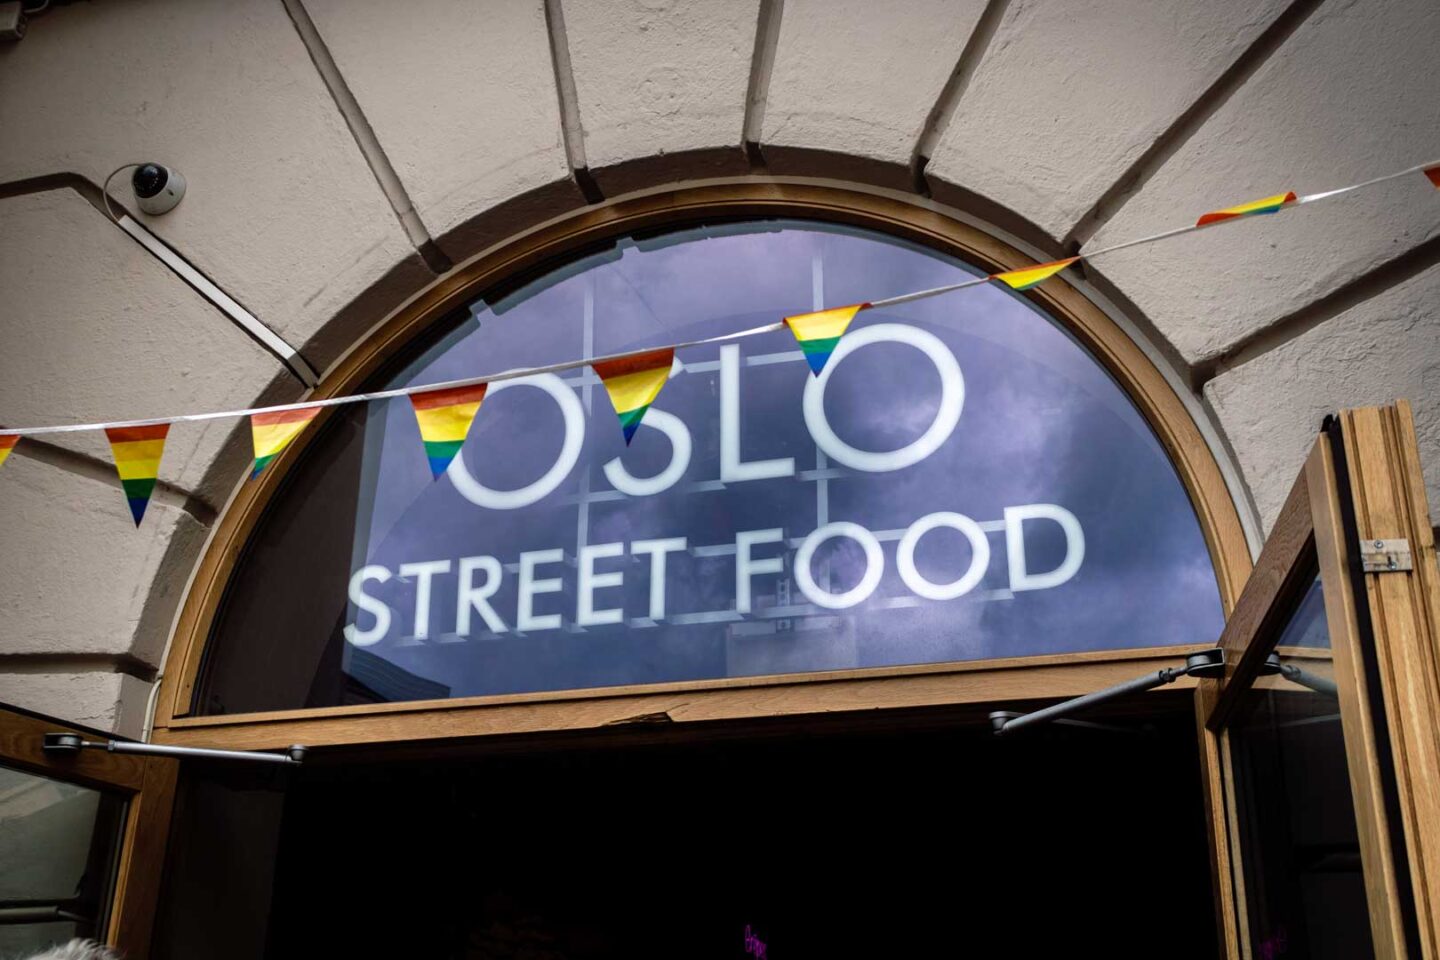 Oslo Street Food market